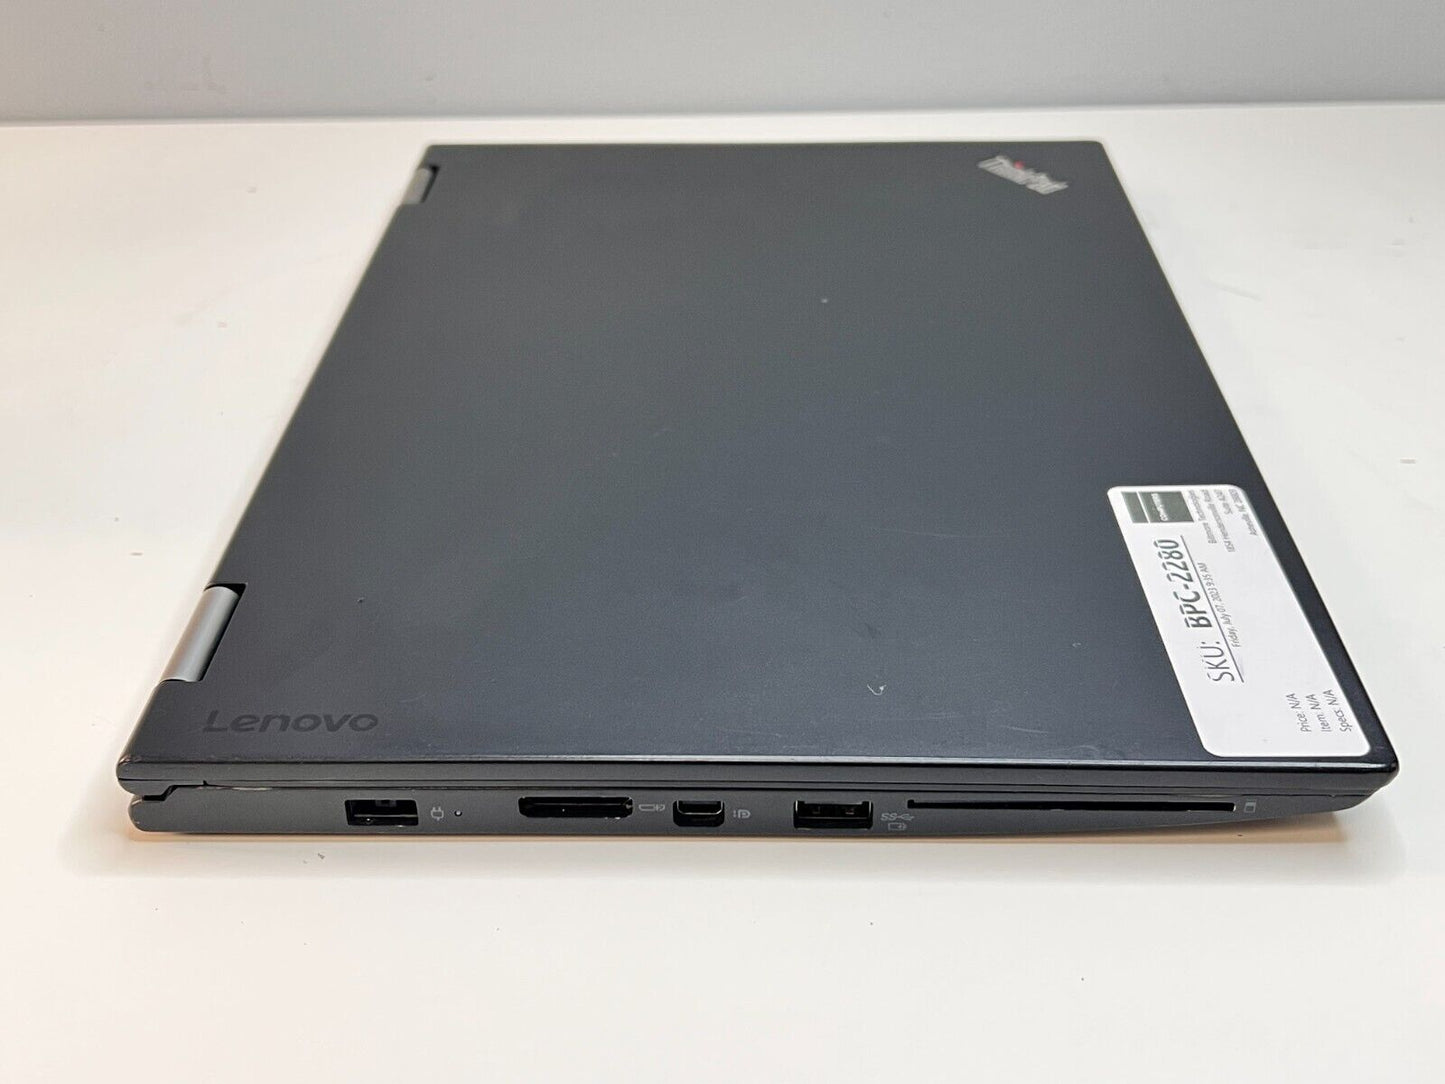 2-in-1 12" Lenovo Yoga X260 i5-6200U, 8GB RAM, 192GB Storage